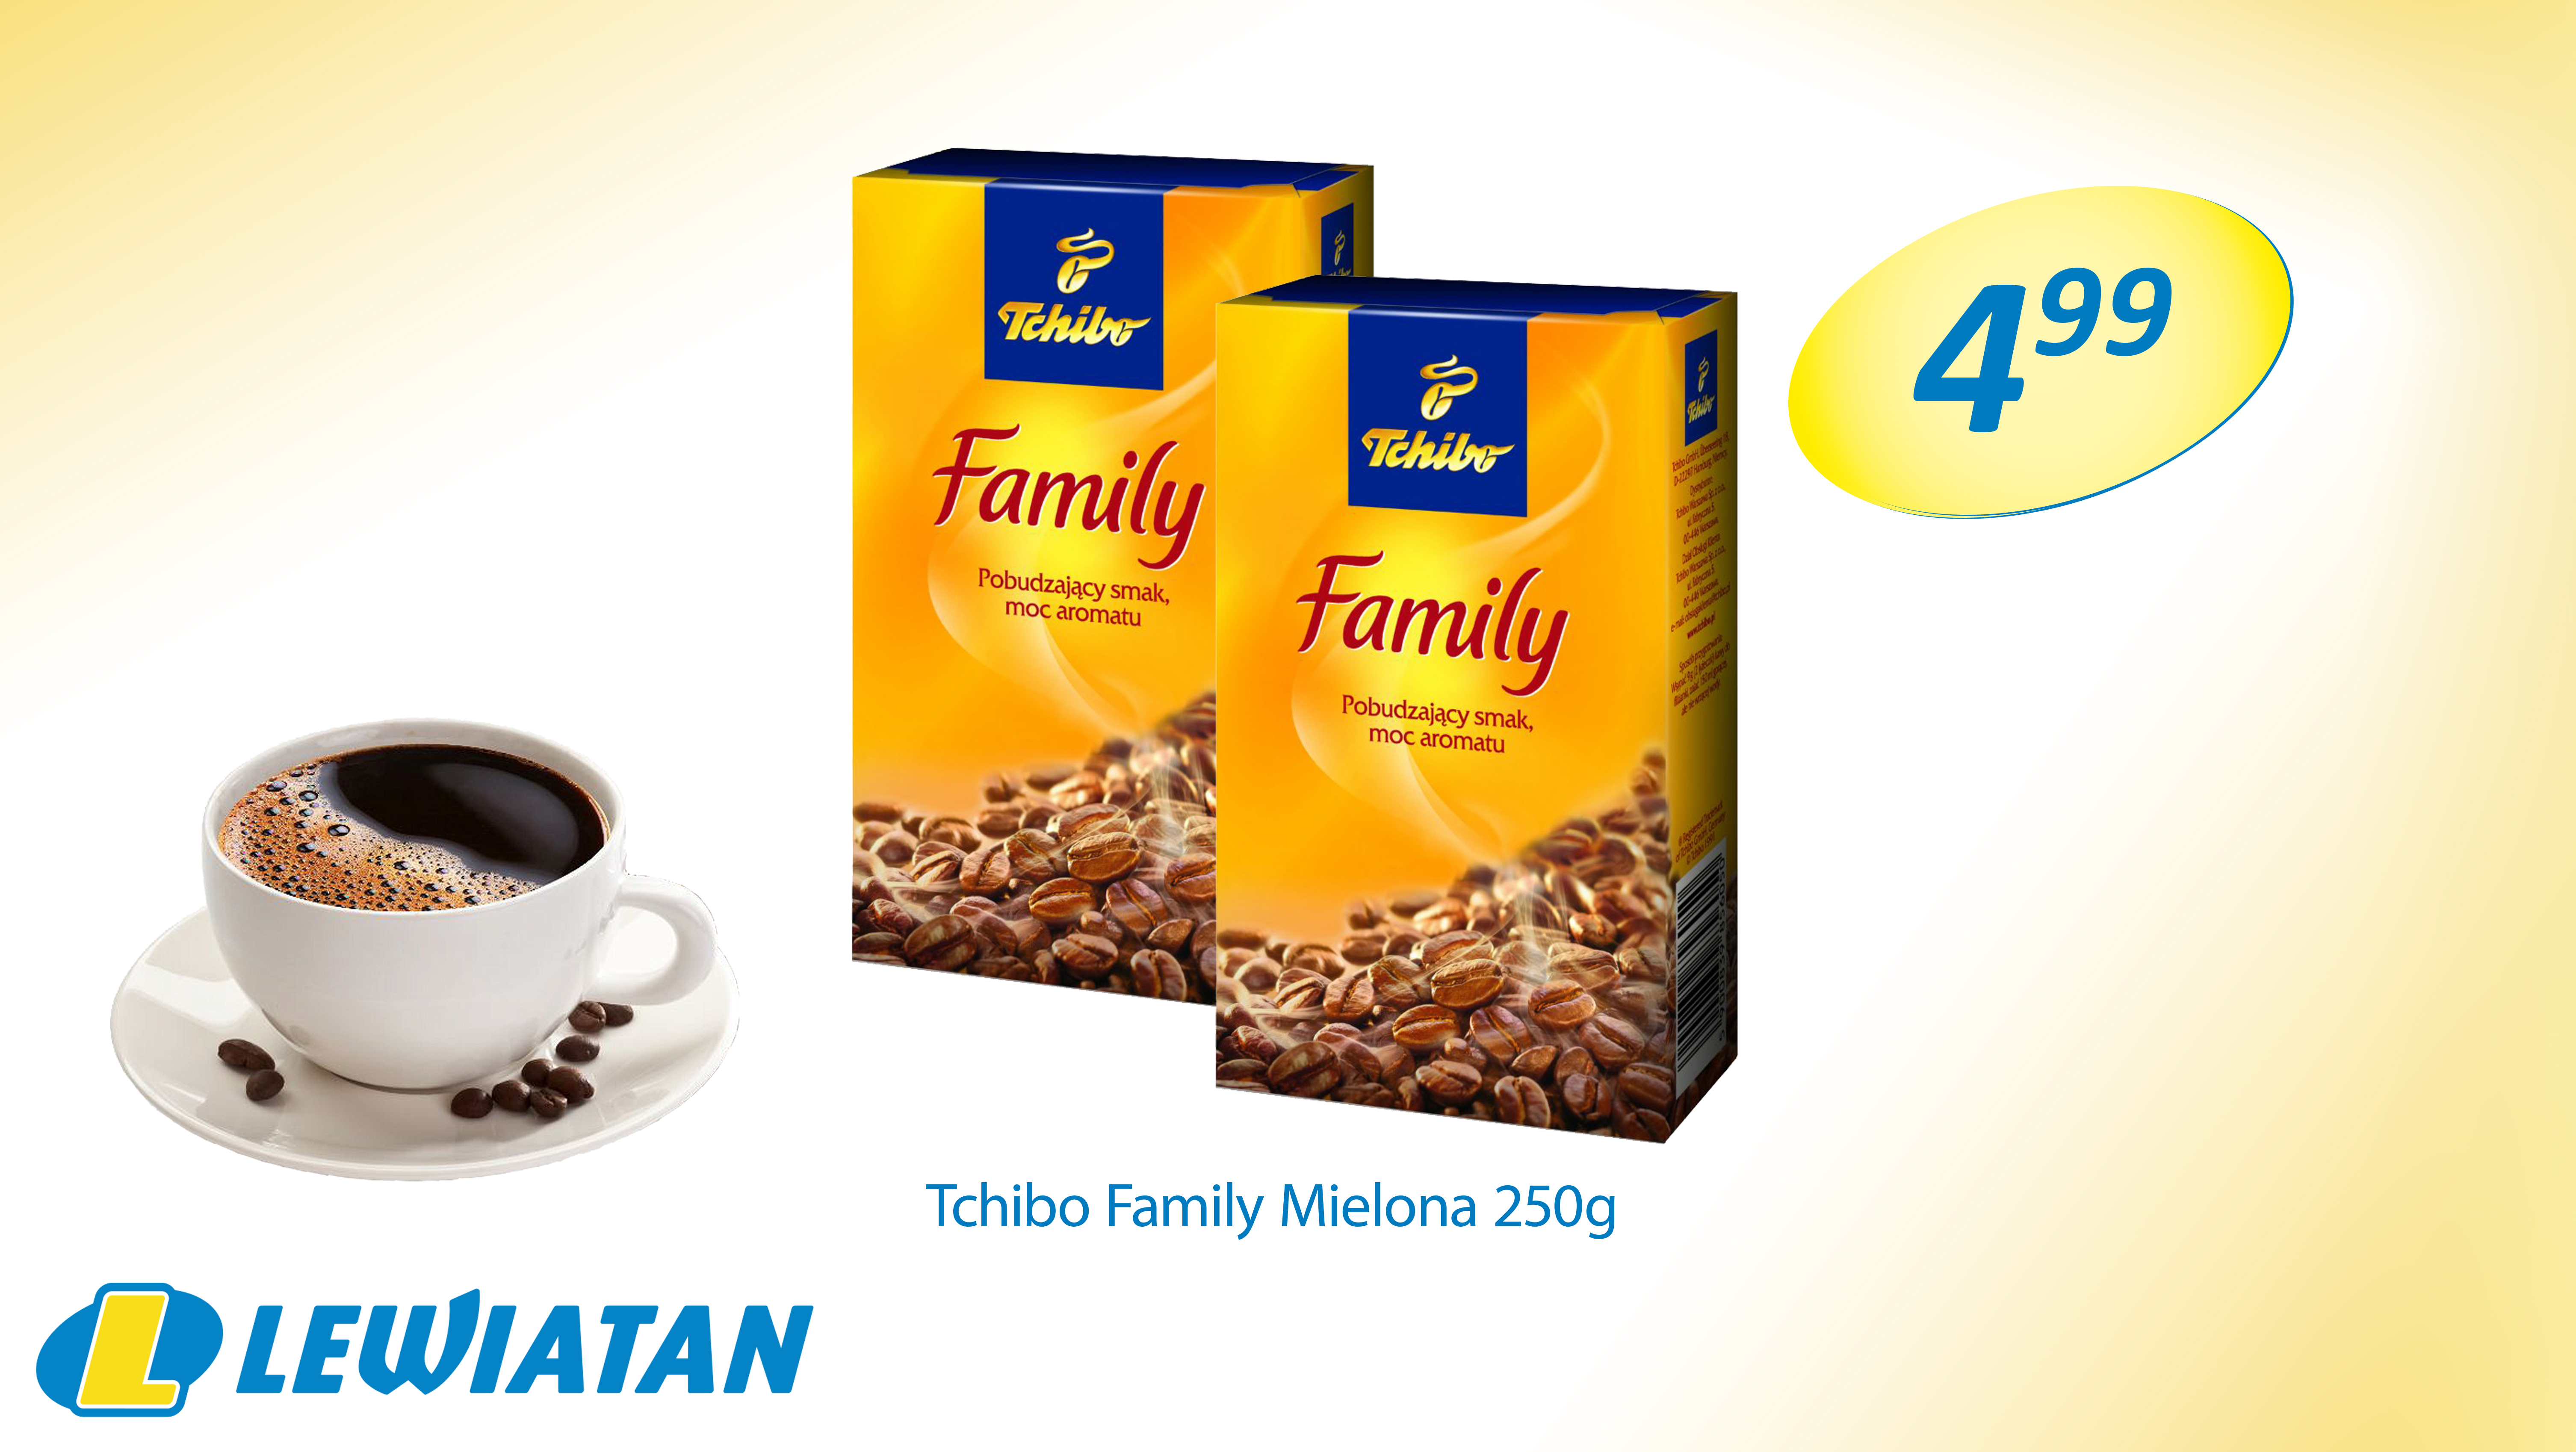 tchibo-family-mielona-250g-499